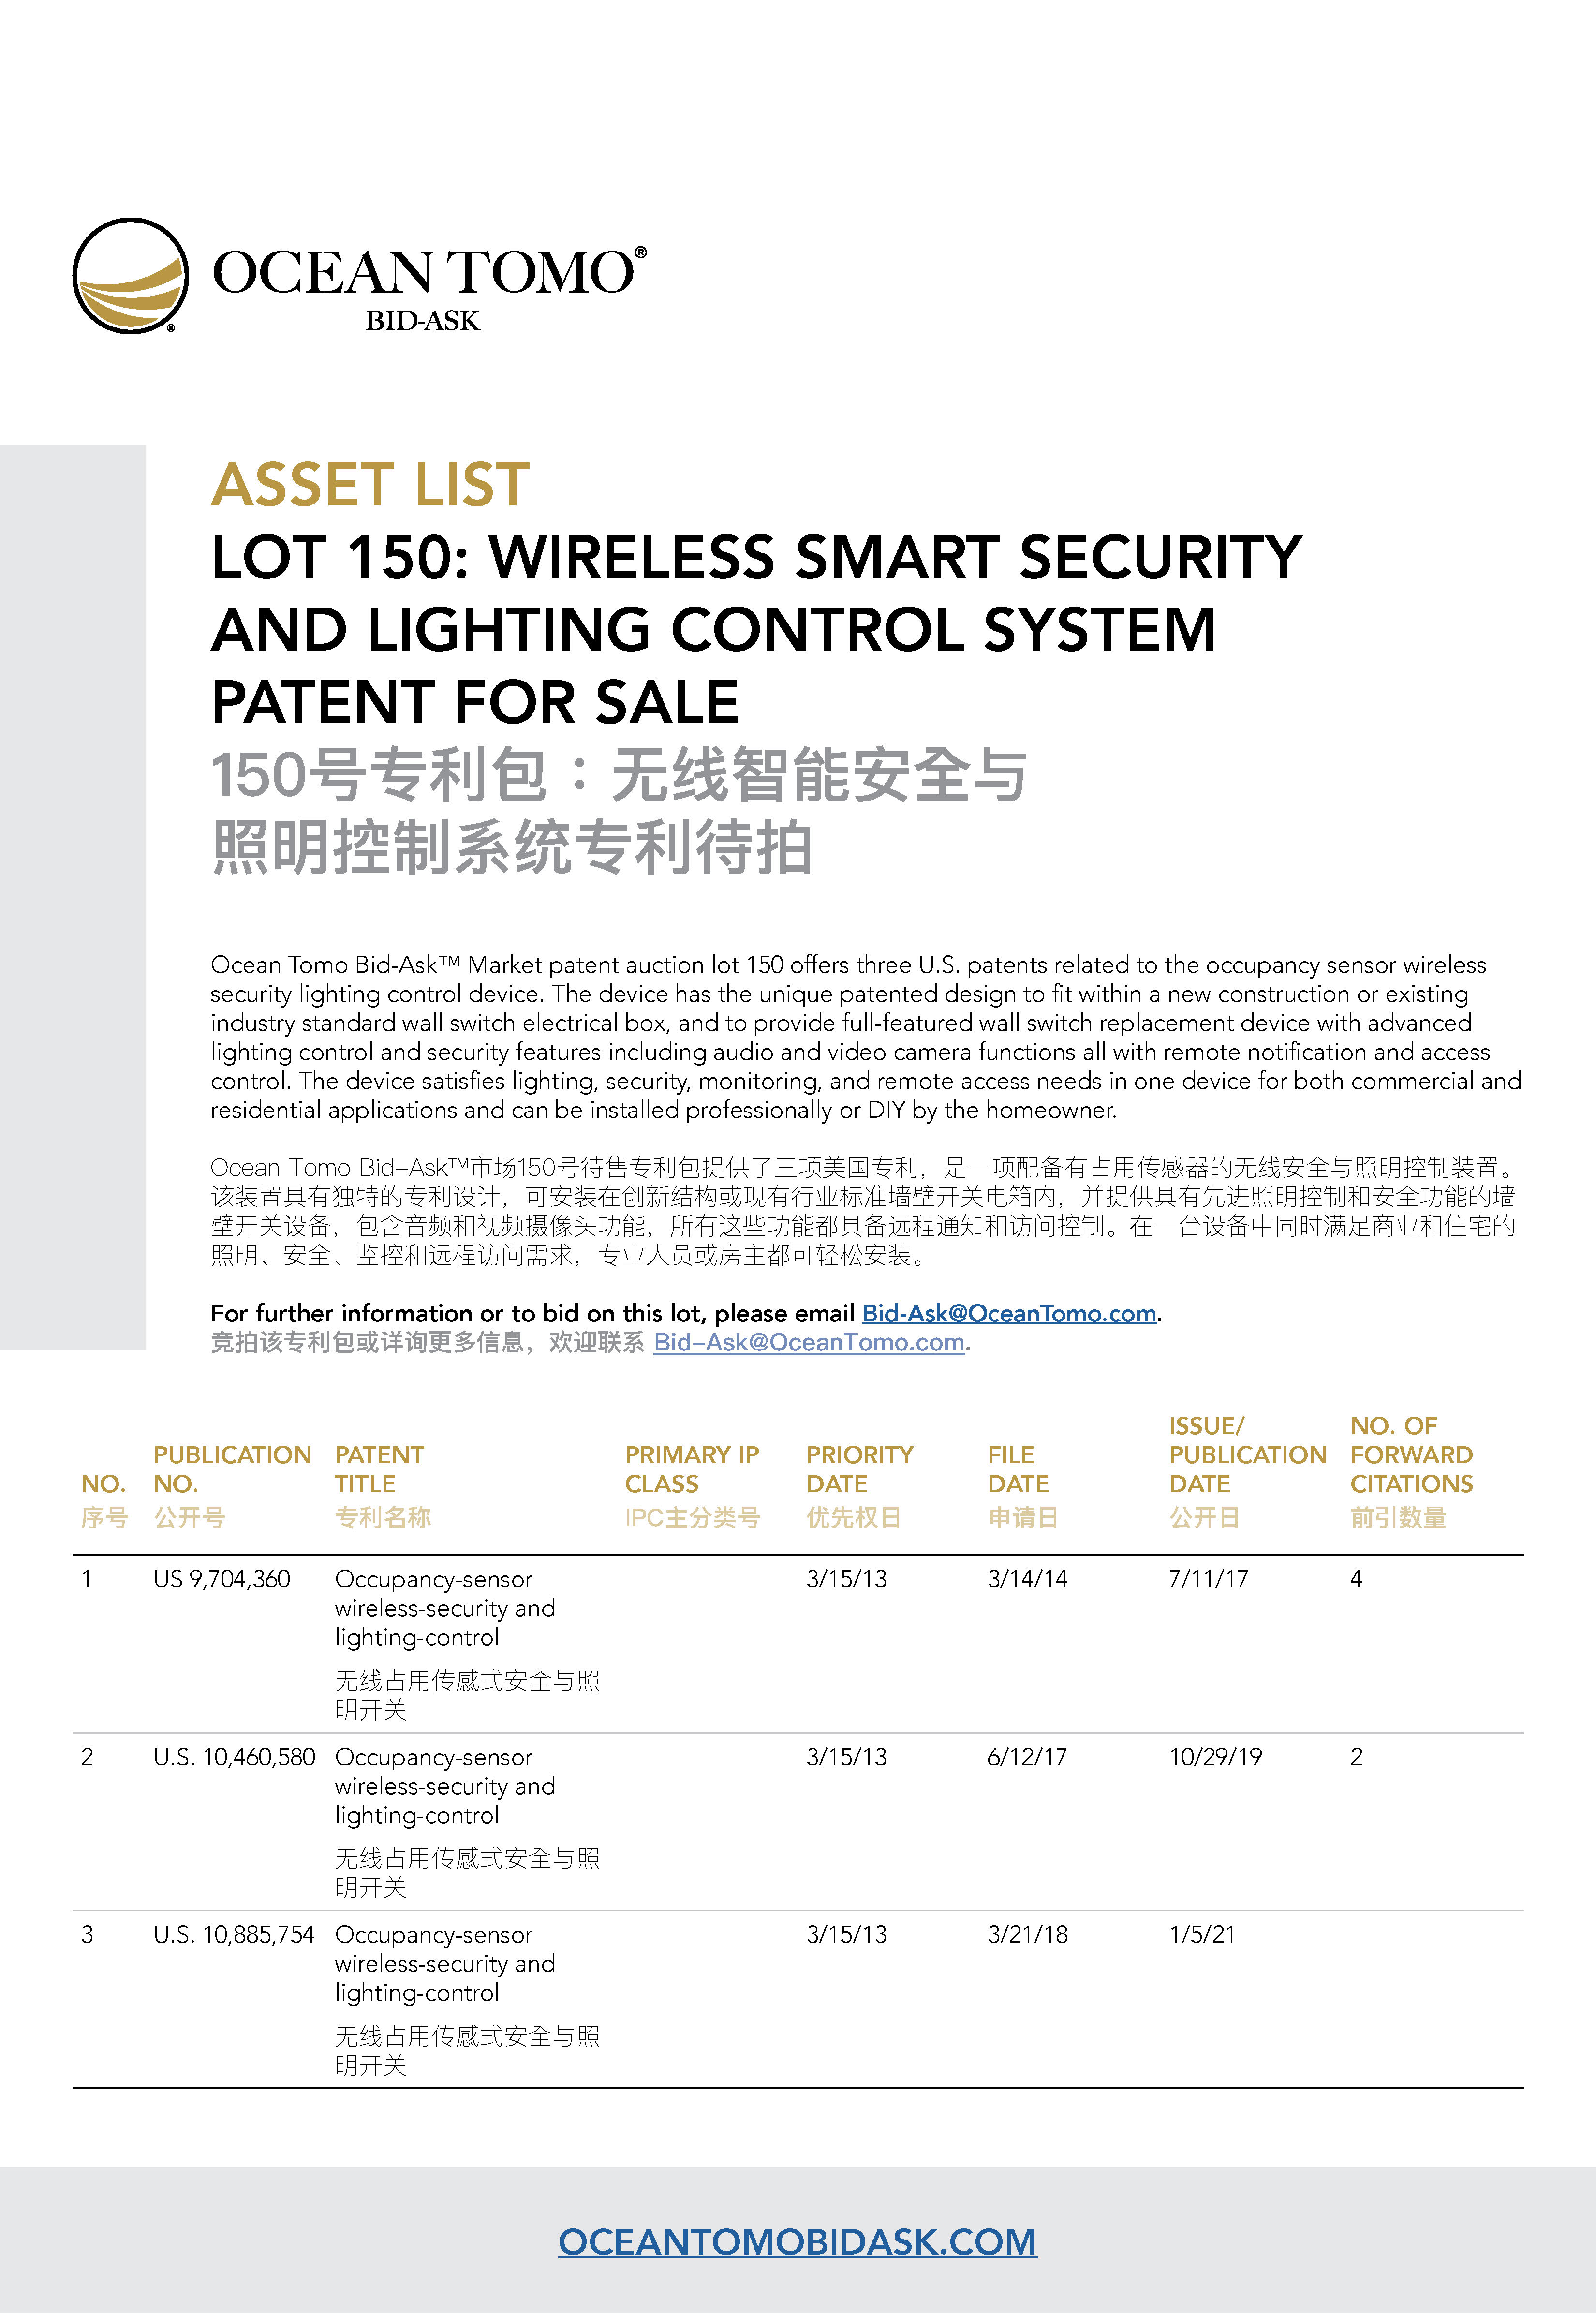 Wireless Smart Security and Lighting Control System Lot Asset List from Ocean Tomo | Ocean Tomo的无线智能安全与照明控制系统专利包资产列表